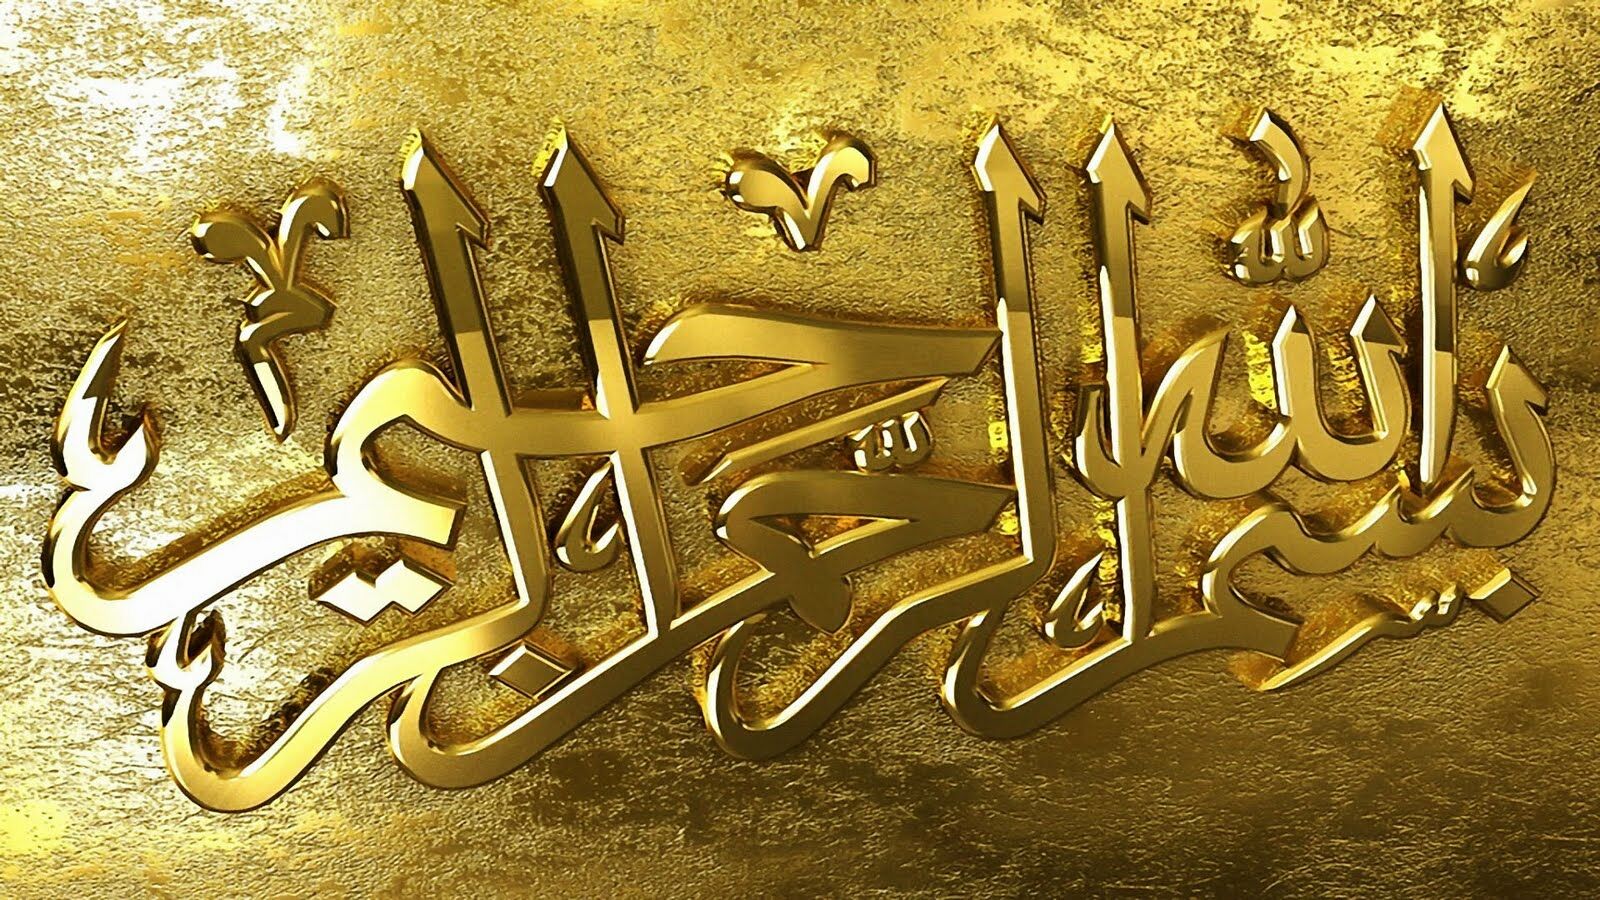 Islamic Photo Download Hd - HD Wallpaper 